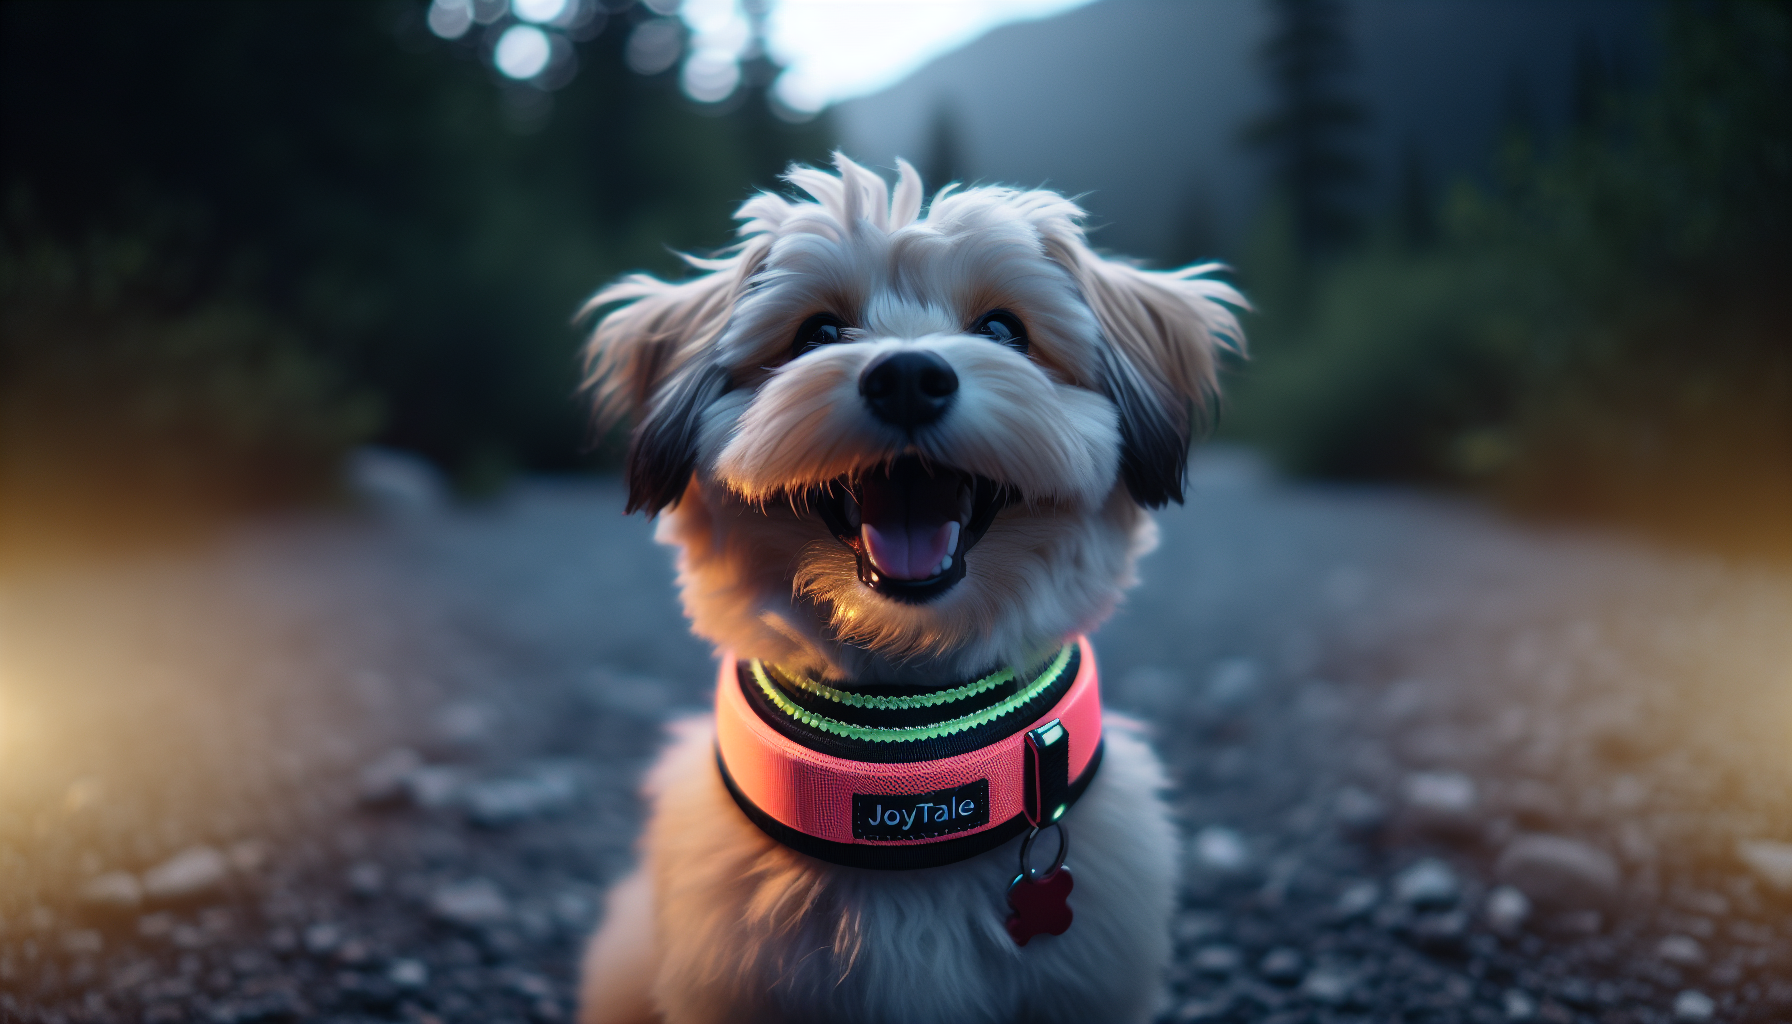 Joytale Reflective Dog Collar with soft neoprene padding and adjustable fit